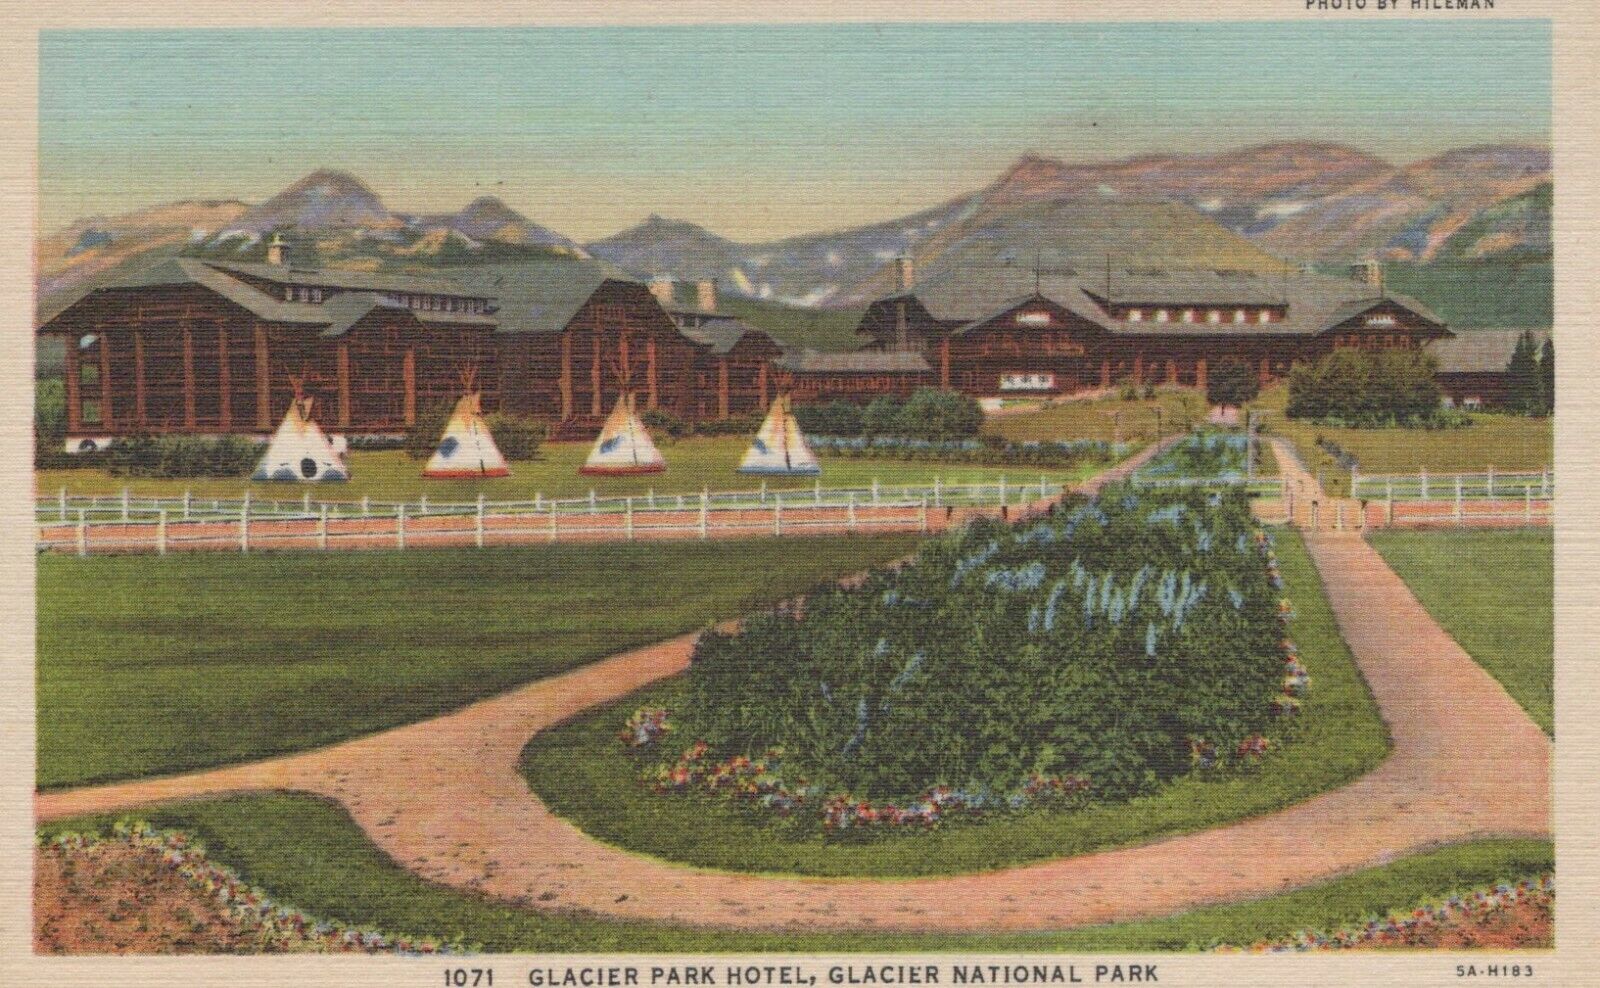 Glacier Park Hotel Glacier National Park Montana Vintage Linen Post Card